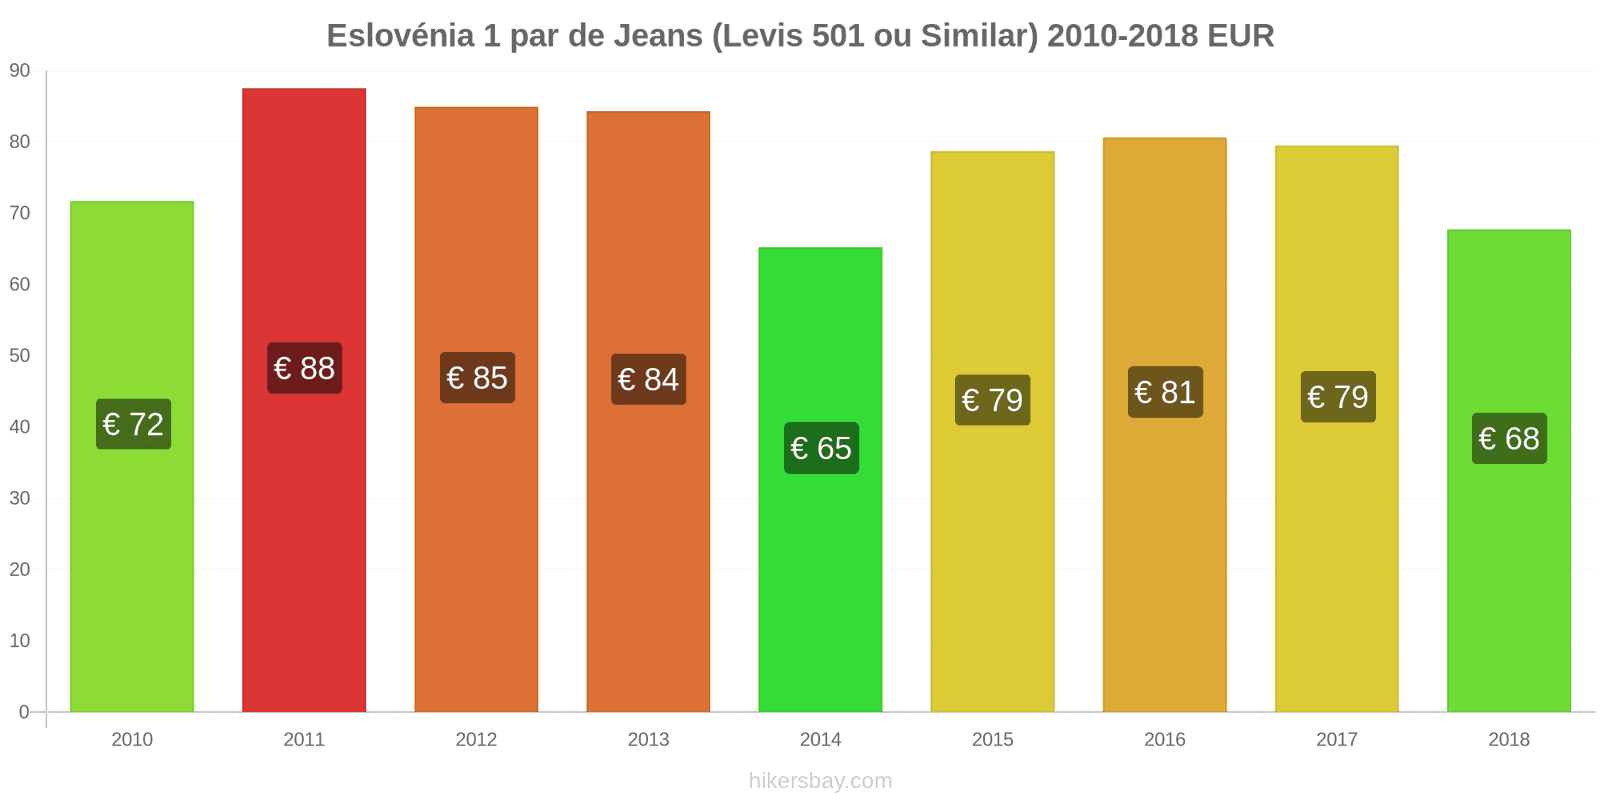 Eslovénia mudanças de preços 1 par de jeans (Levis 501 ou similares) hikersbay.com